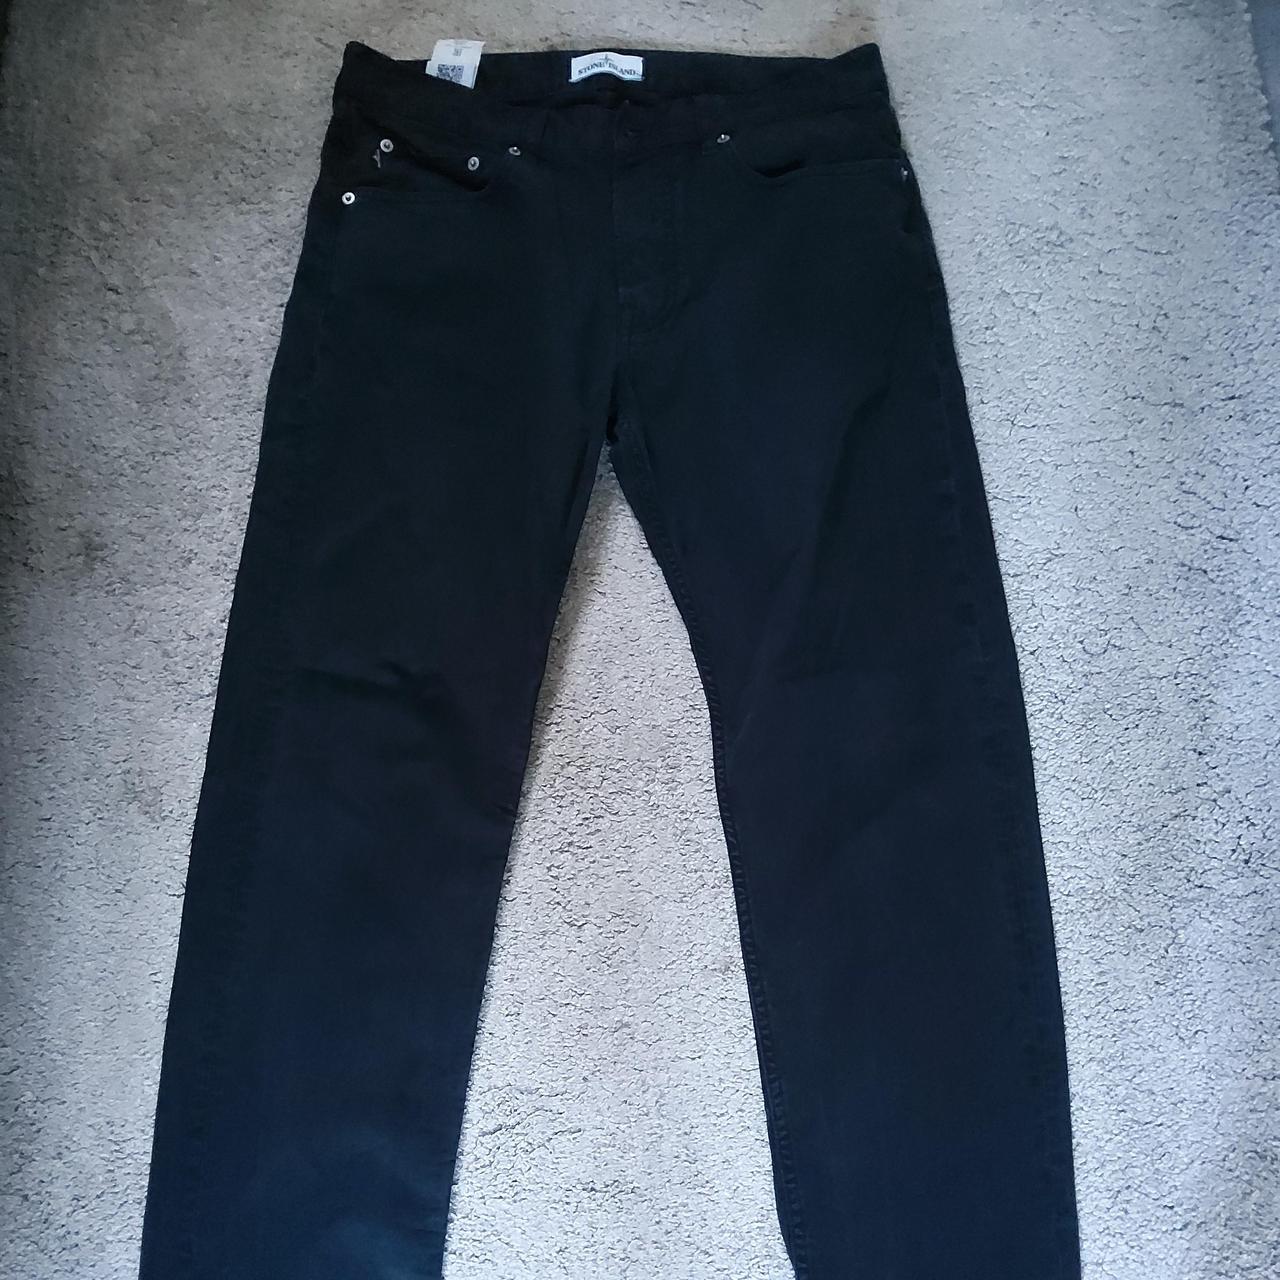 Genuine stone island jeans in black Waist:31 length:34 - Depop